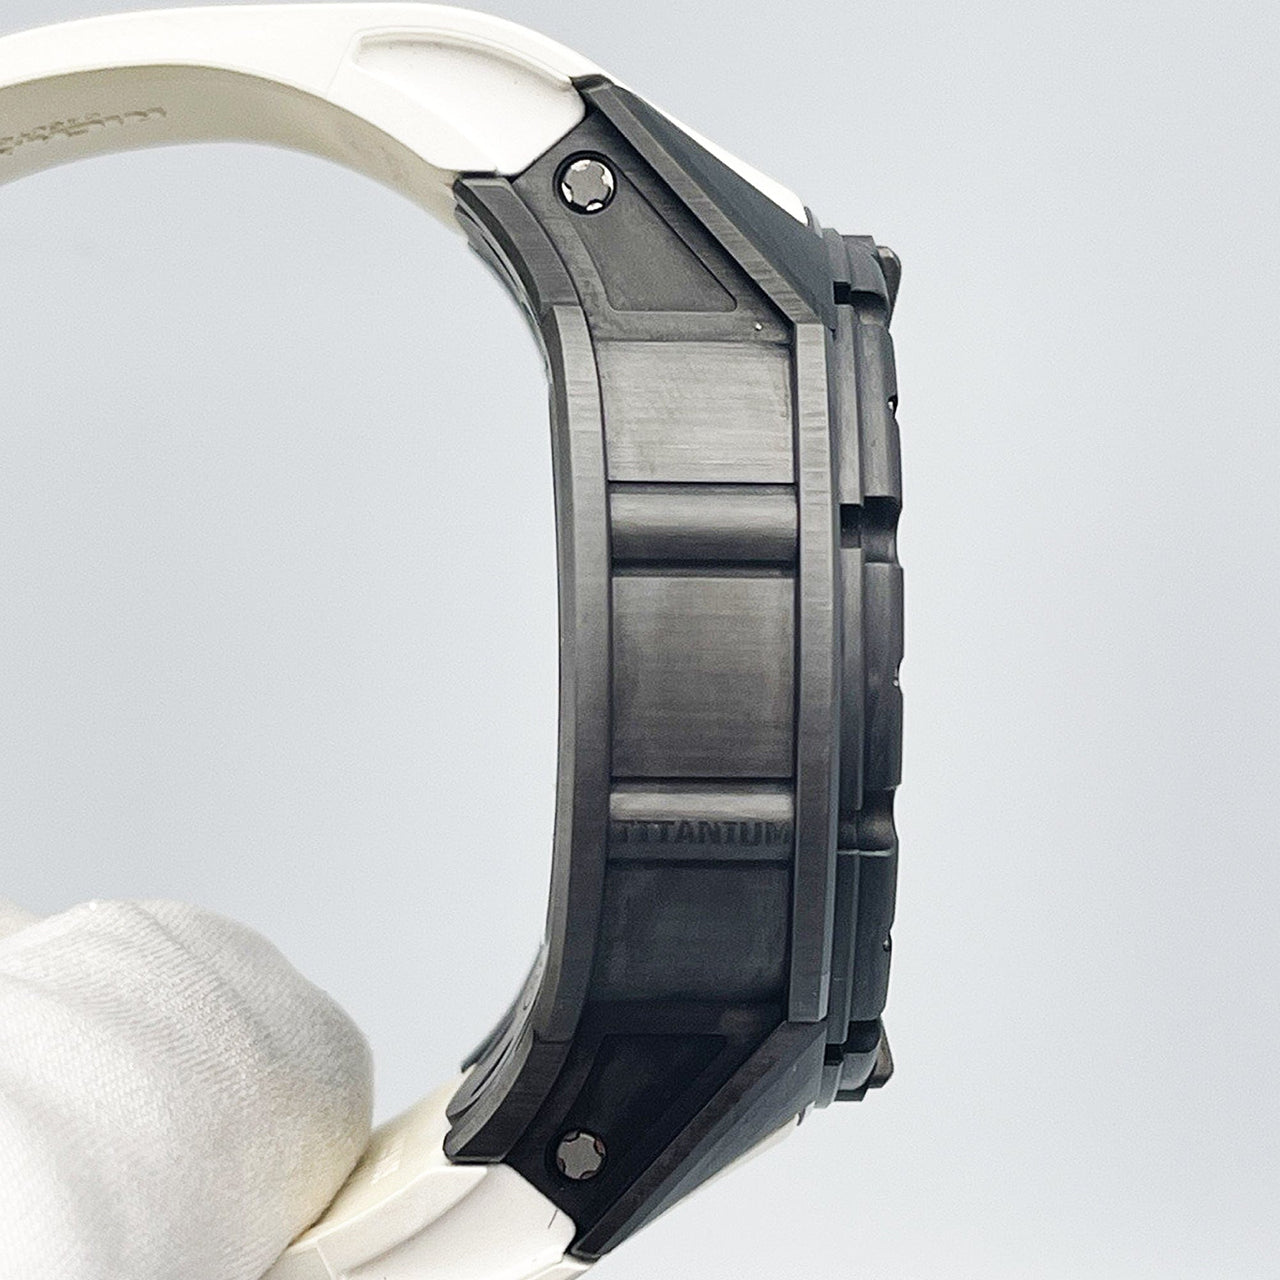 Luxury Watch Richard Mille Titanium Argentina Limited Edition RM028 Wrist Aficionado